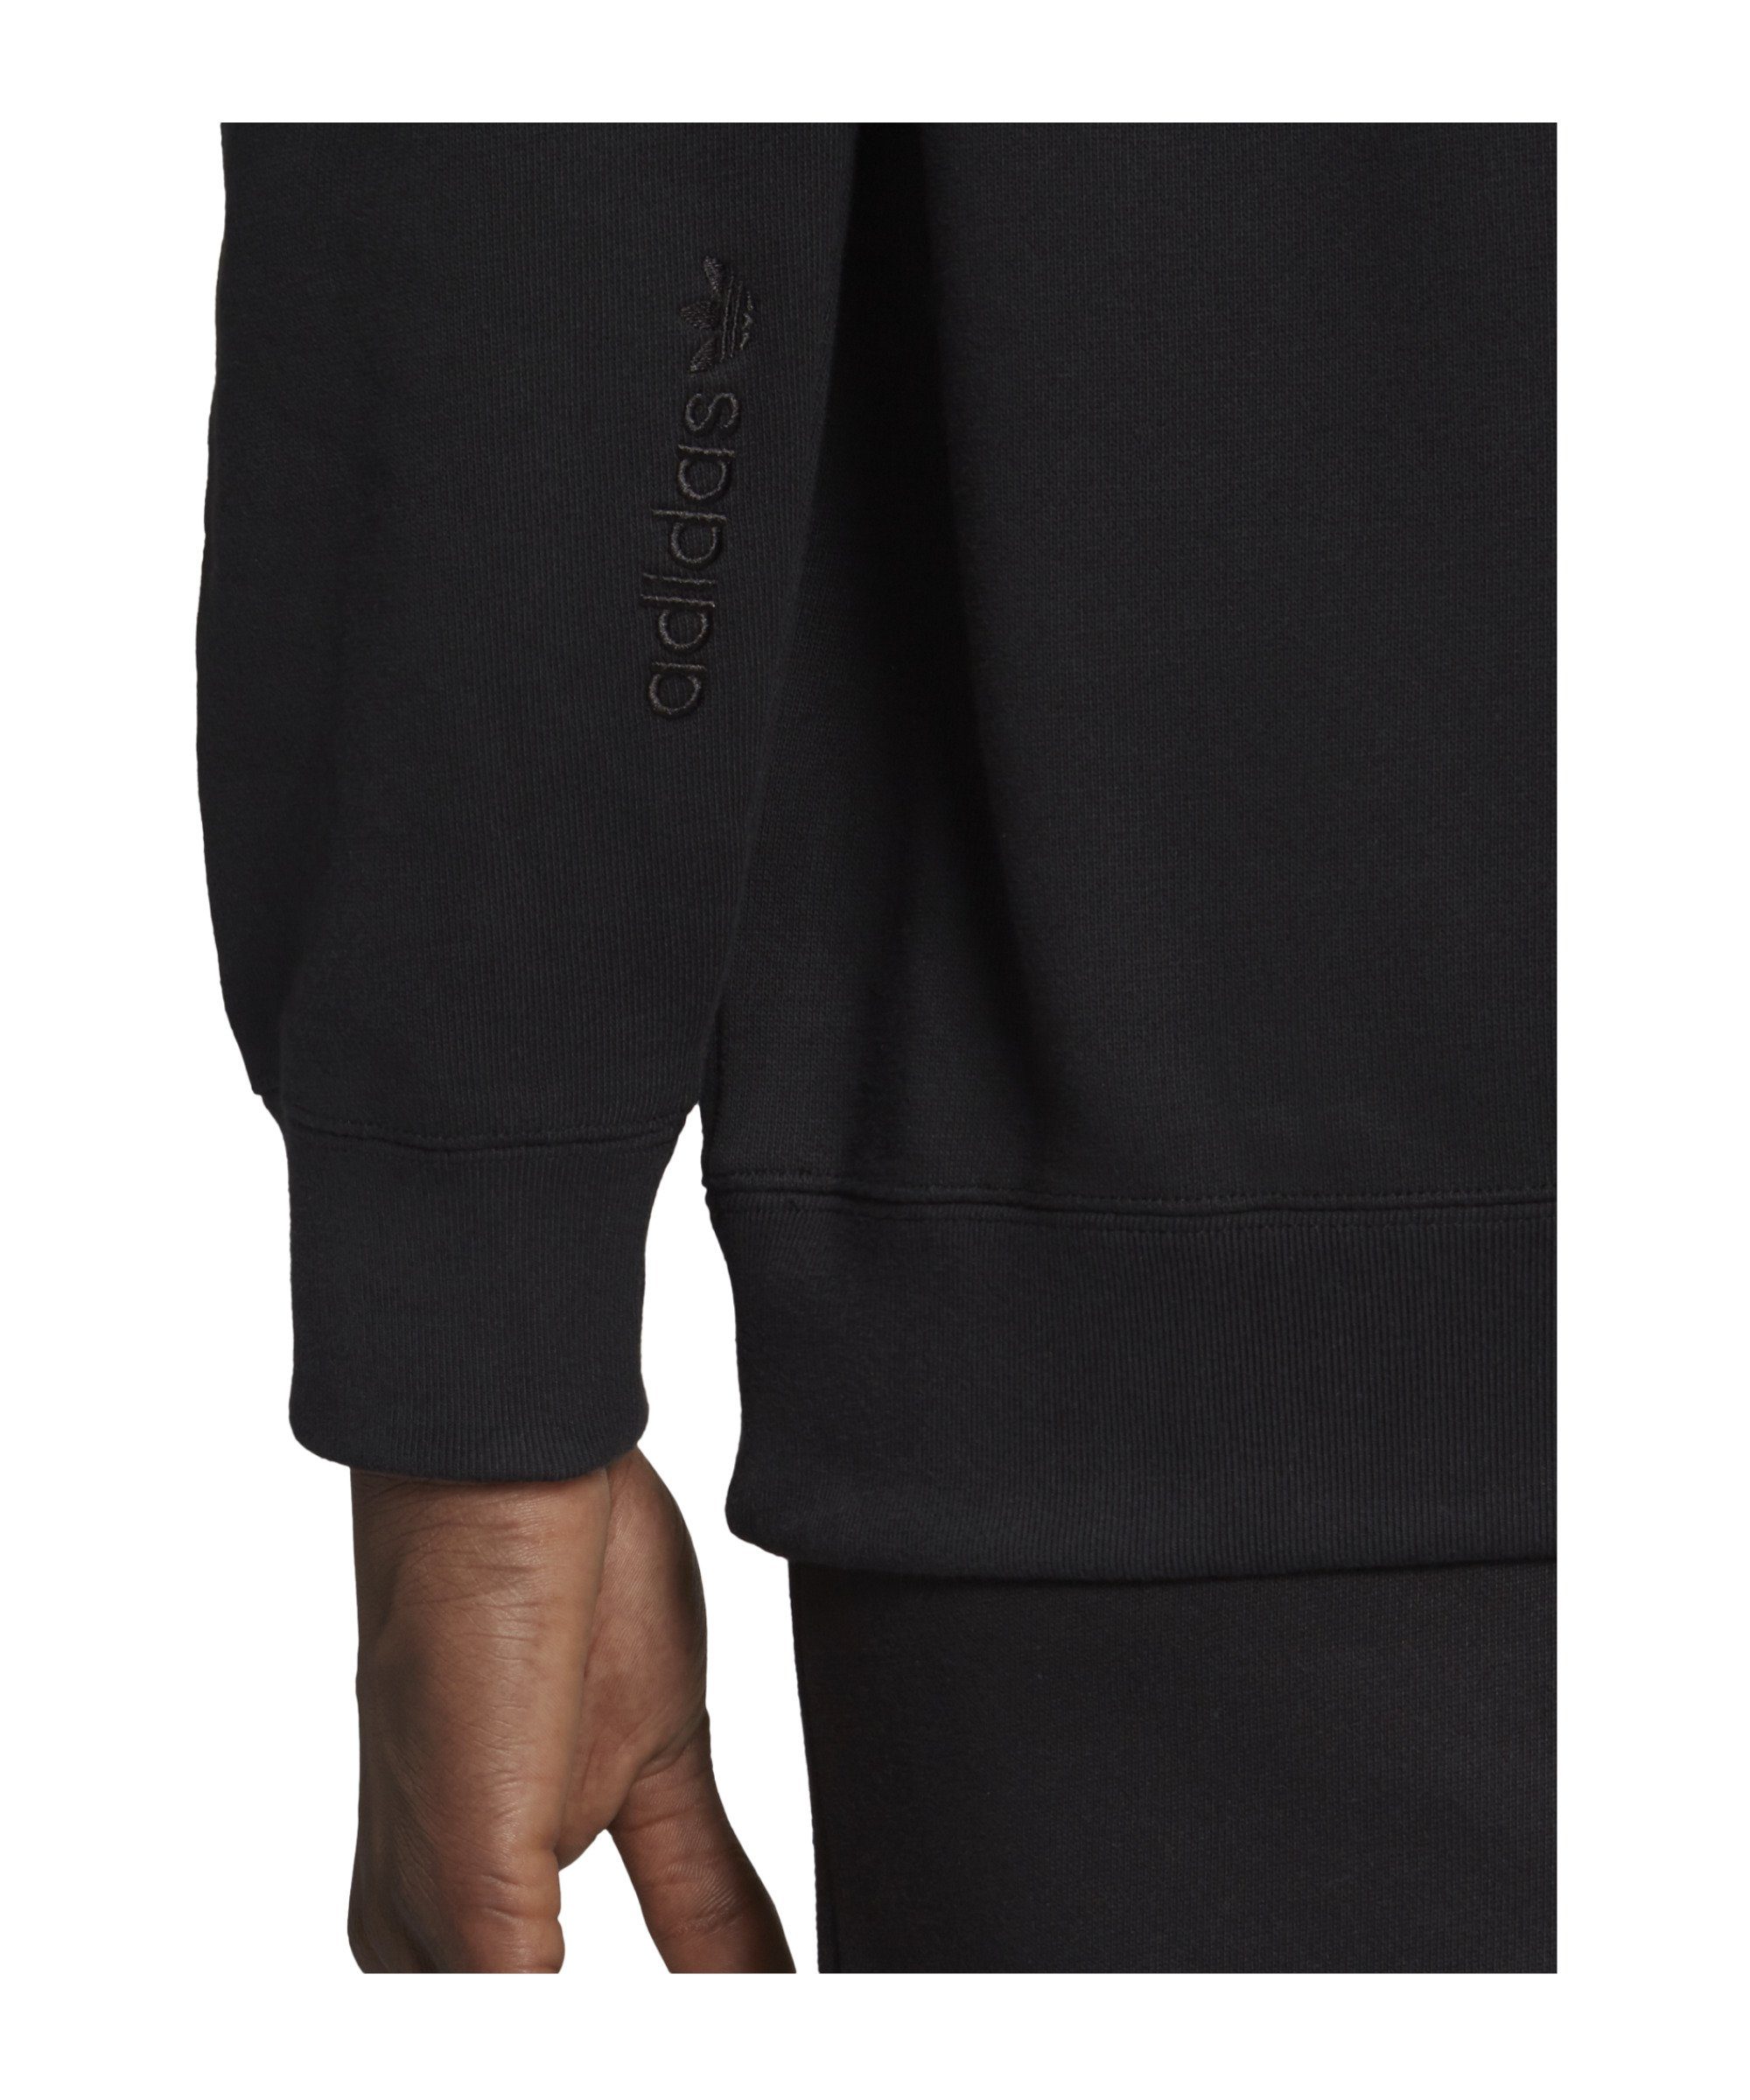 Originals Hoody A33 Trefoil schwarz Sweatshirt adidas